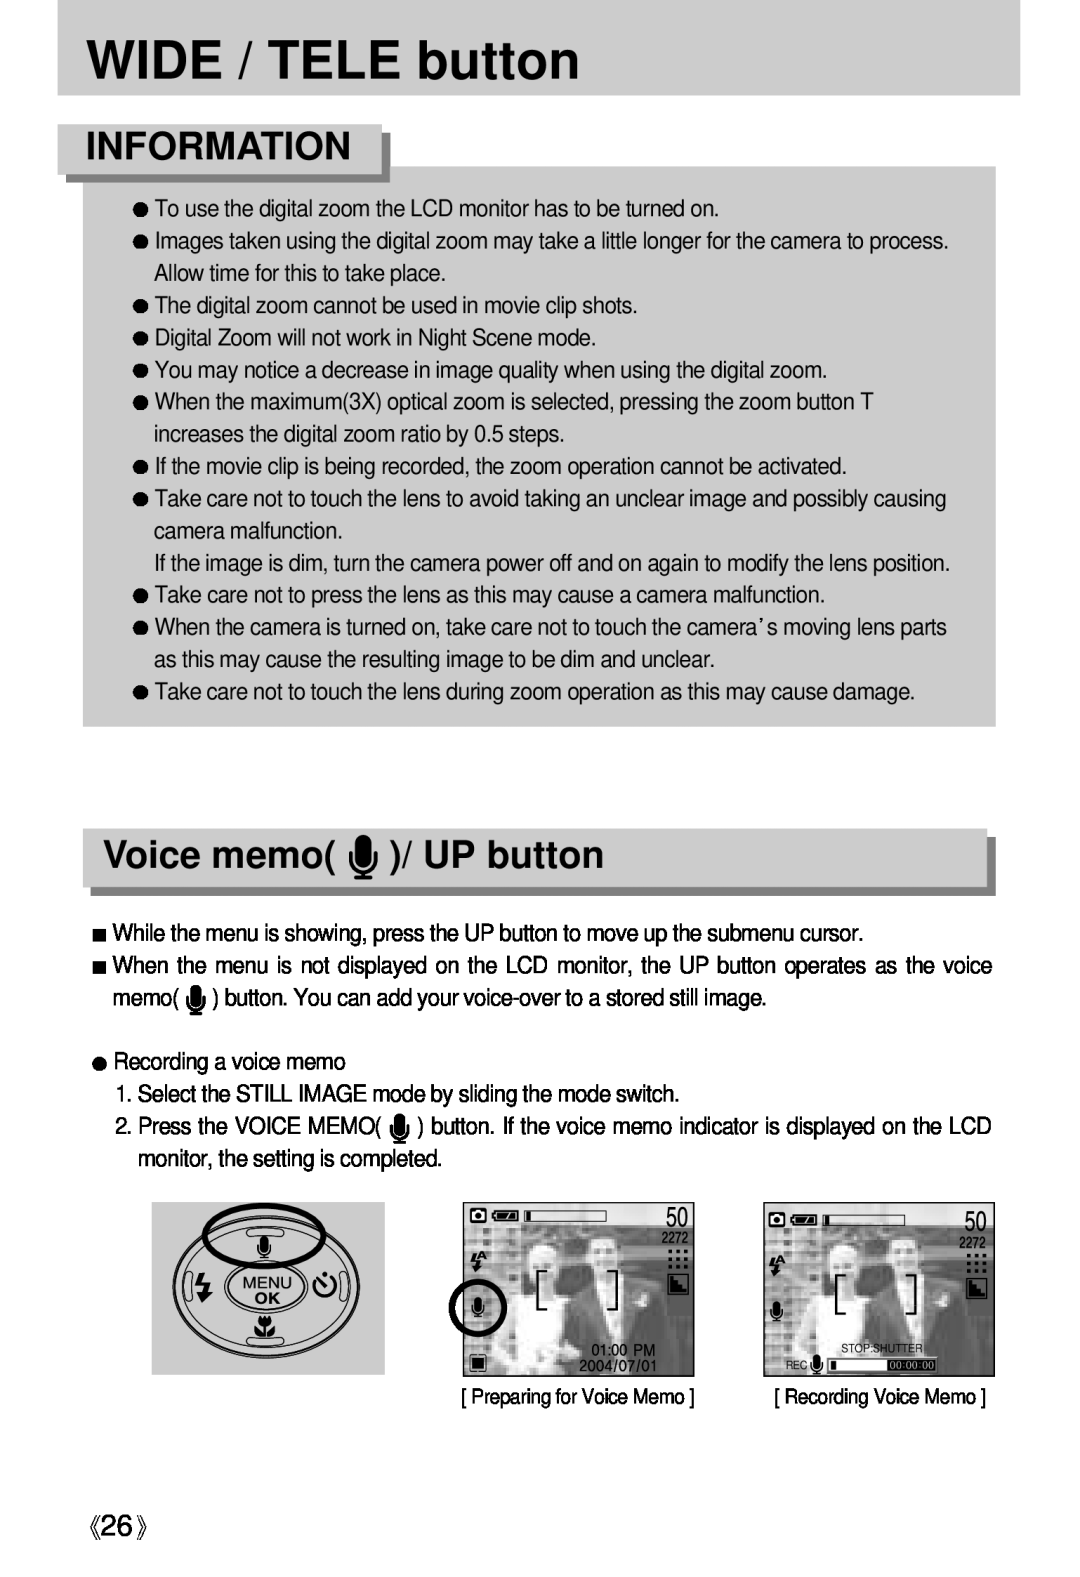 Samsung Digimax U-CA user manual Voice memo / UP button, WIDE / TELE button, Information 